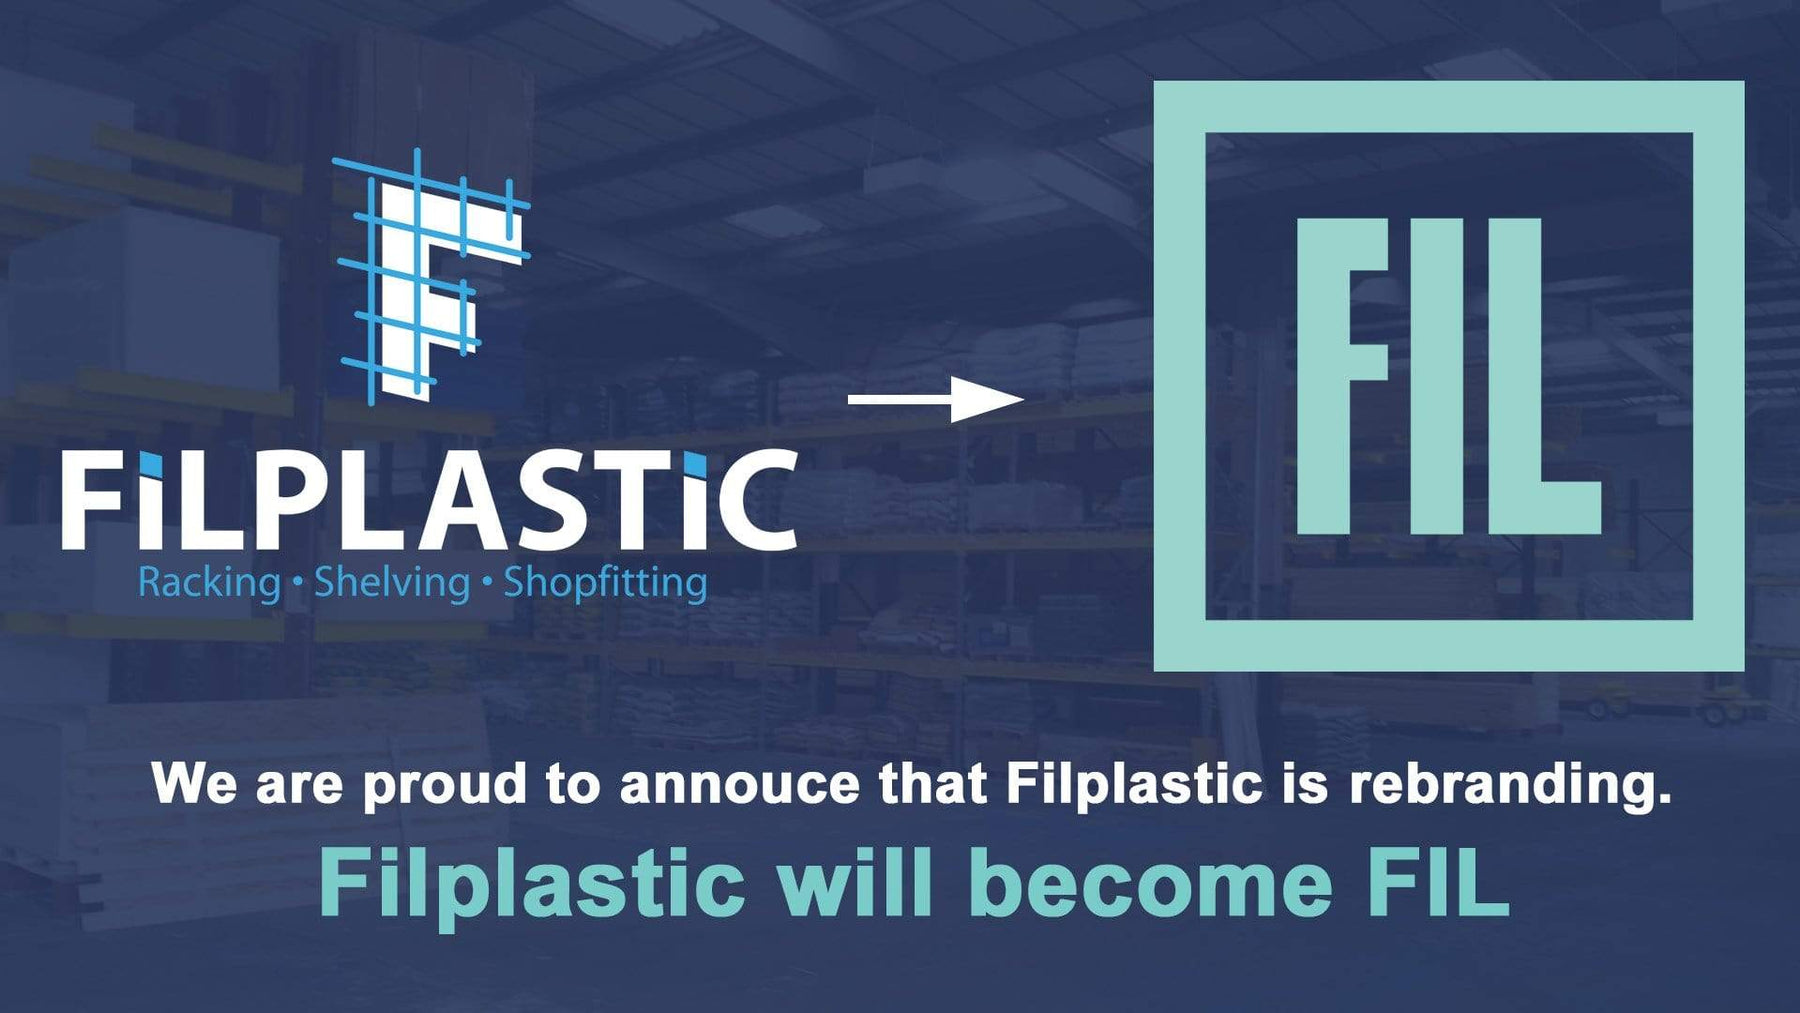 Filplastic becomes FIL - Rebrand and Name Change